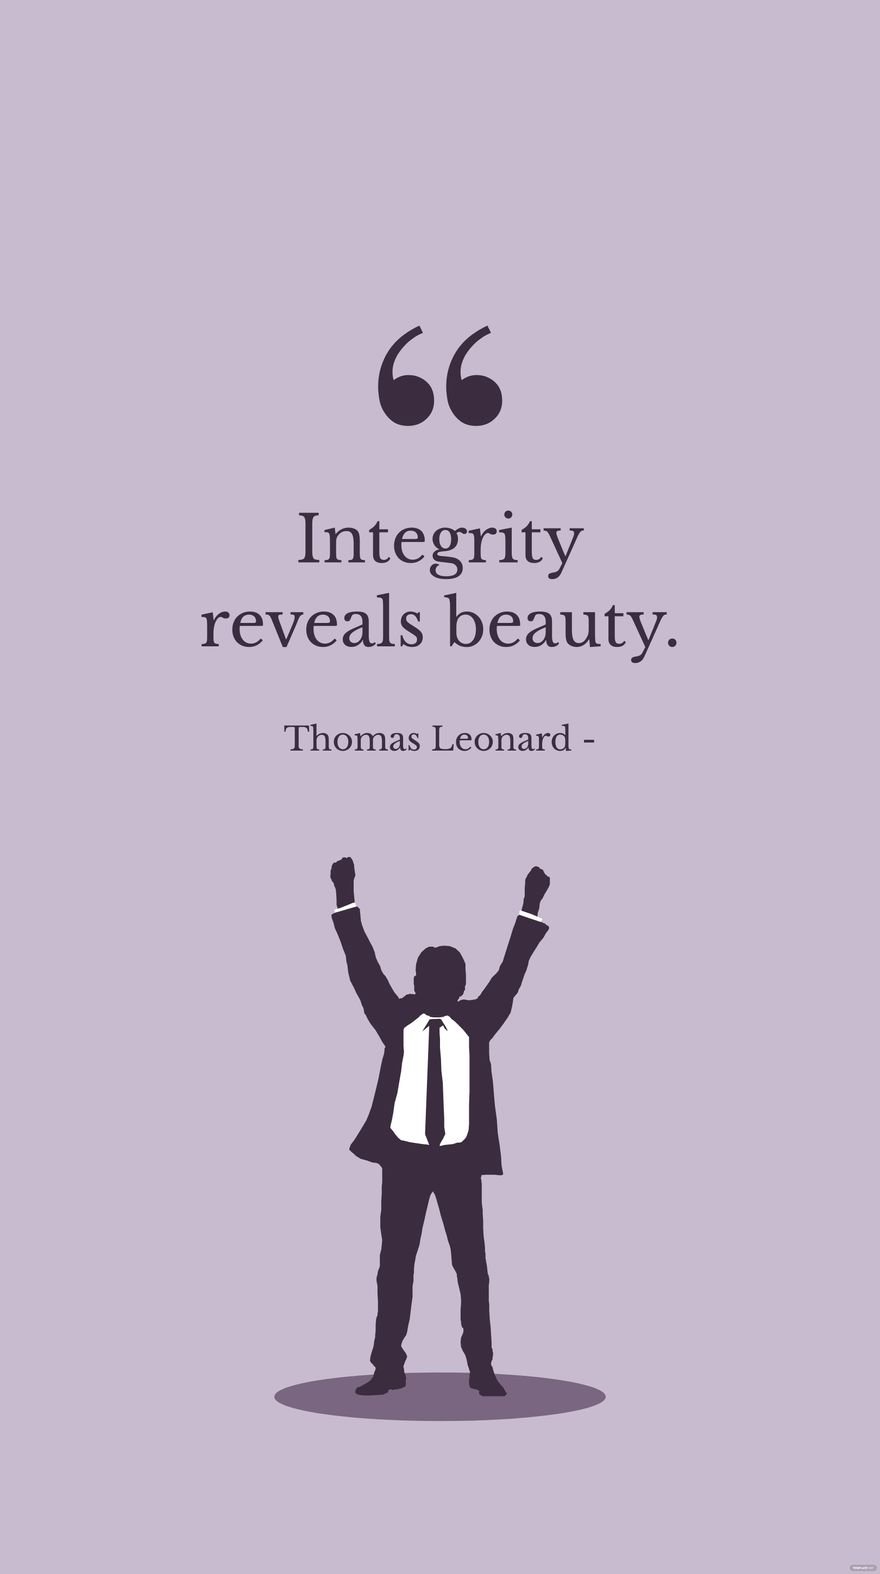 Free Thomas Leonard - Integrity reveals beauty. in JPG